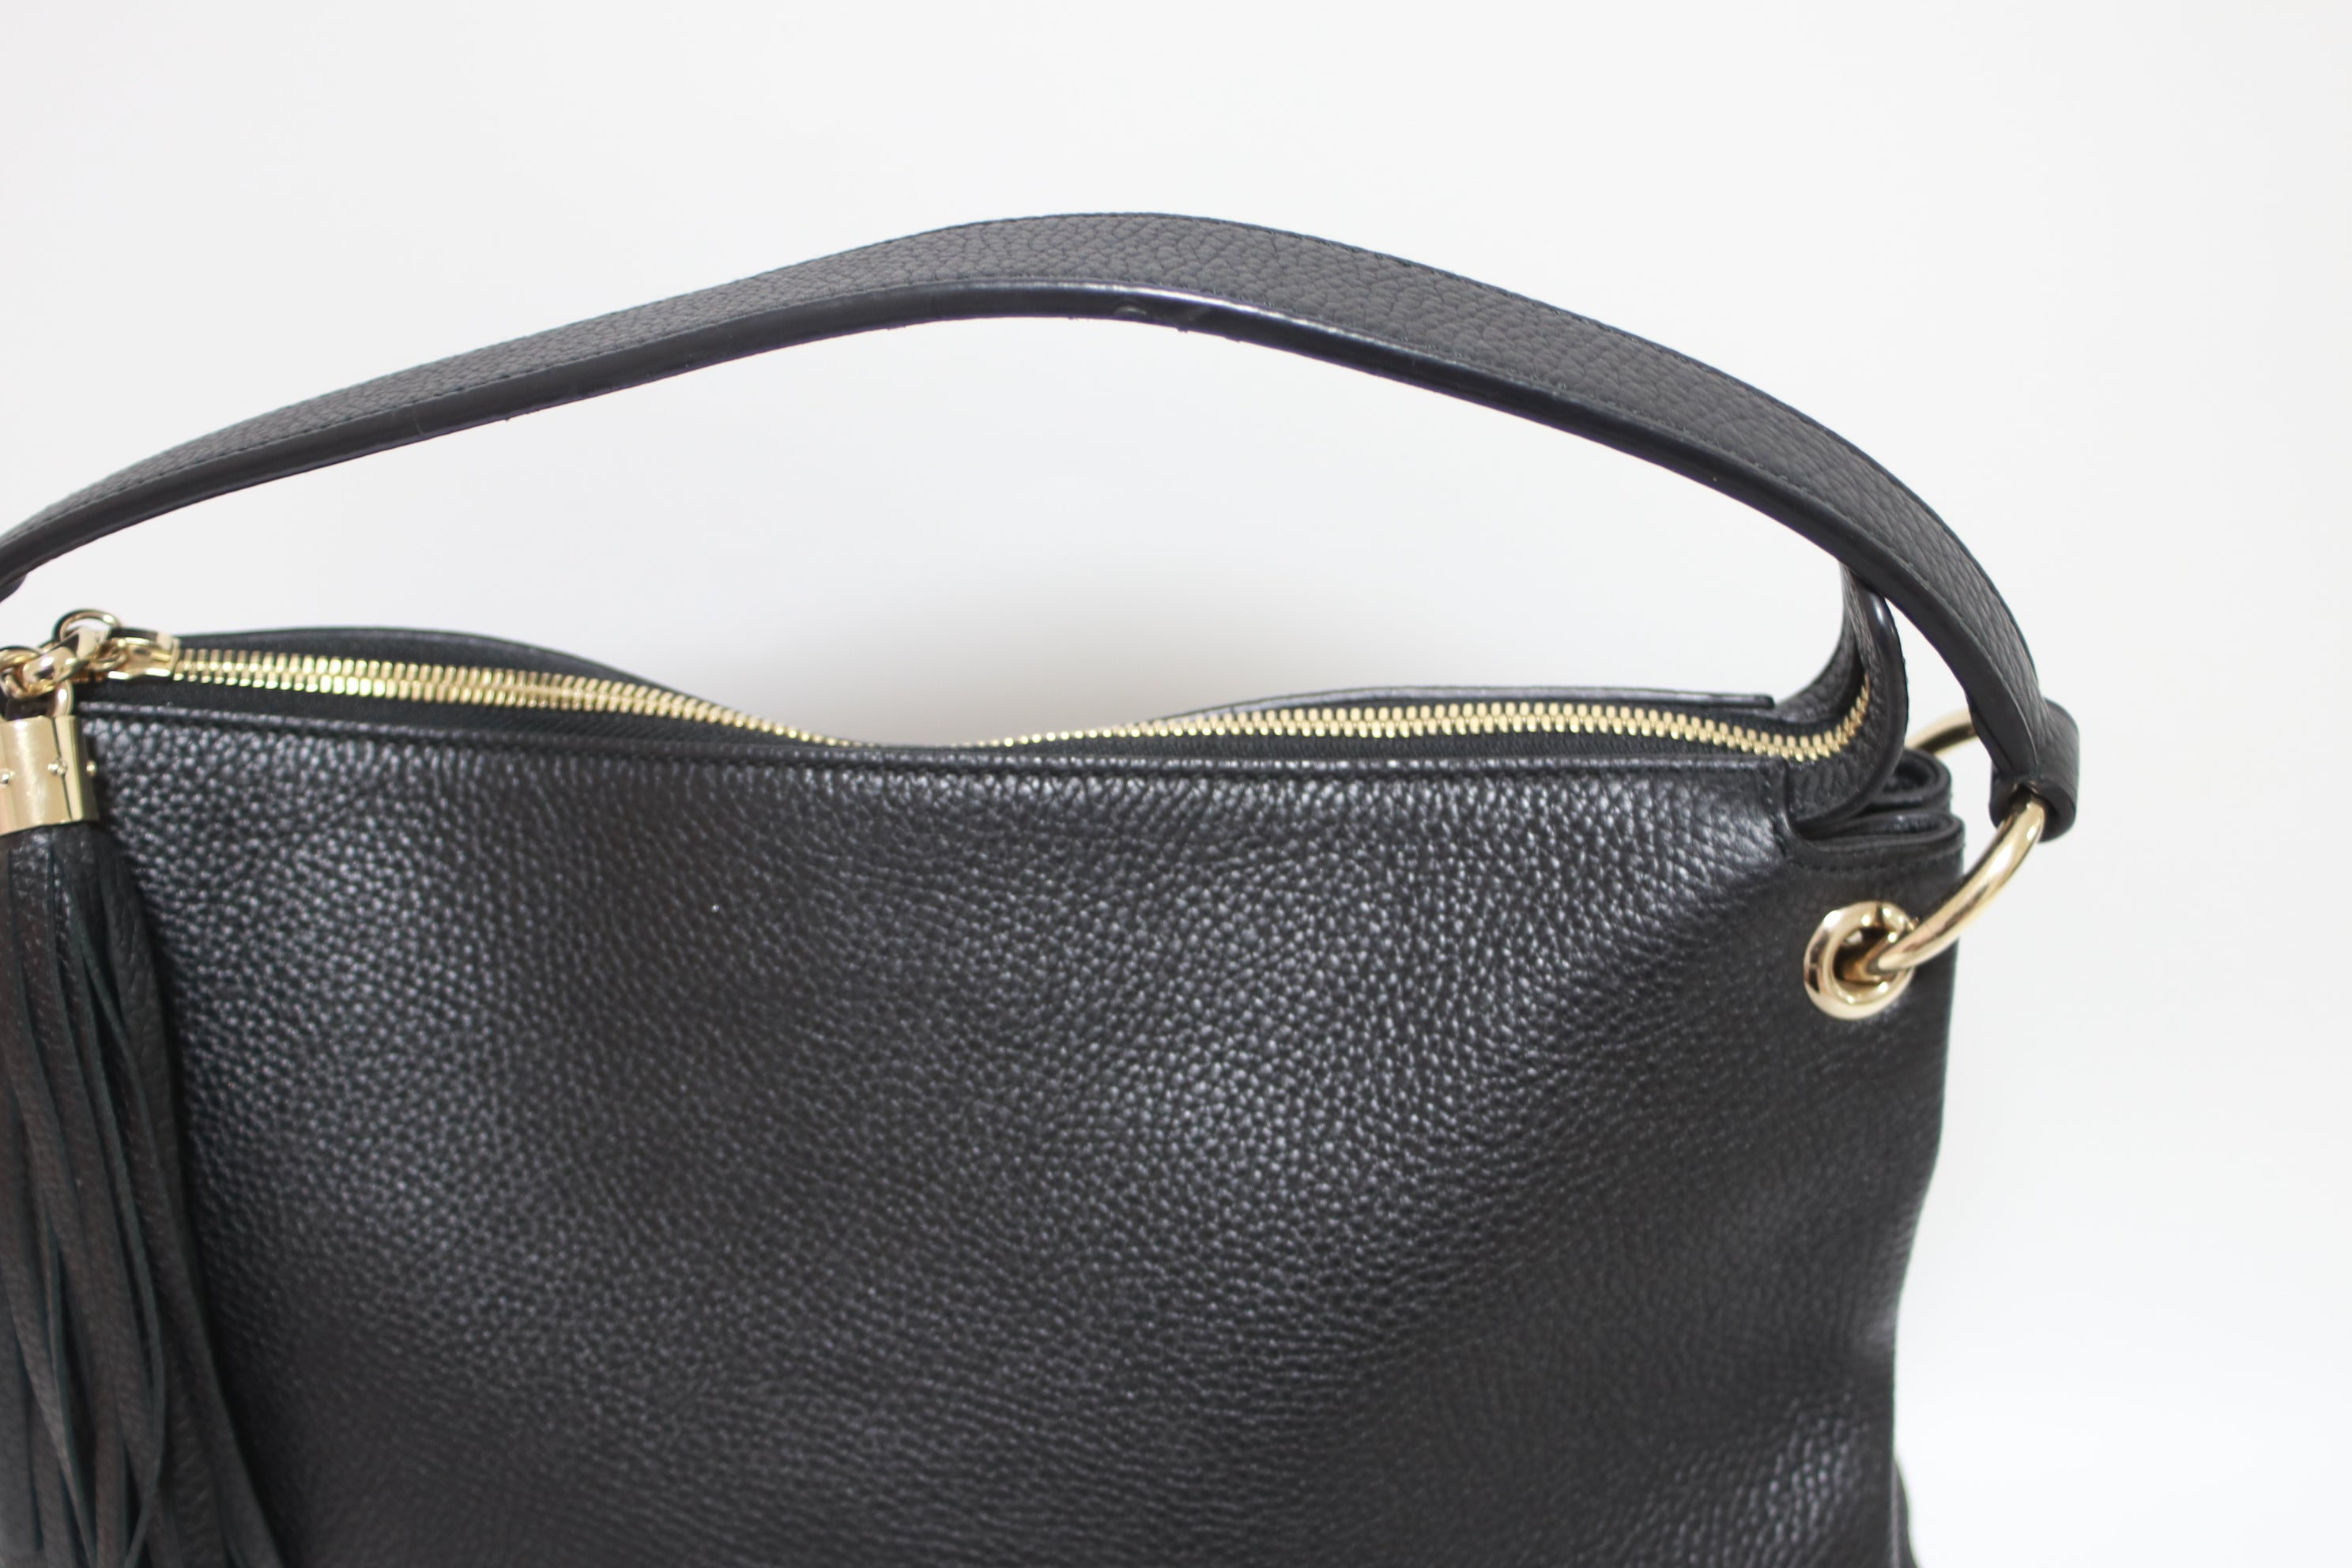 Gucci Soho Two Way Shoulder Bag Black (Missing Strap) Used (7500)